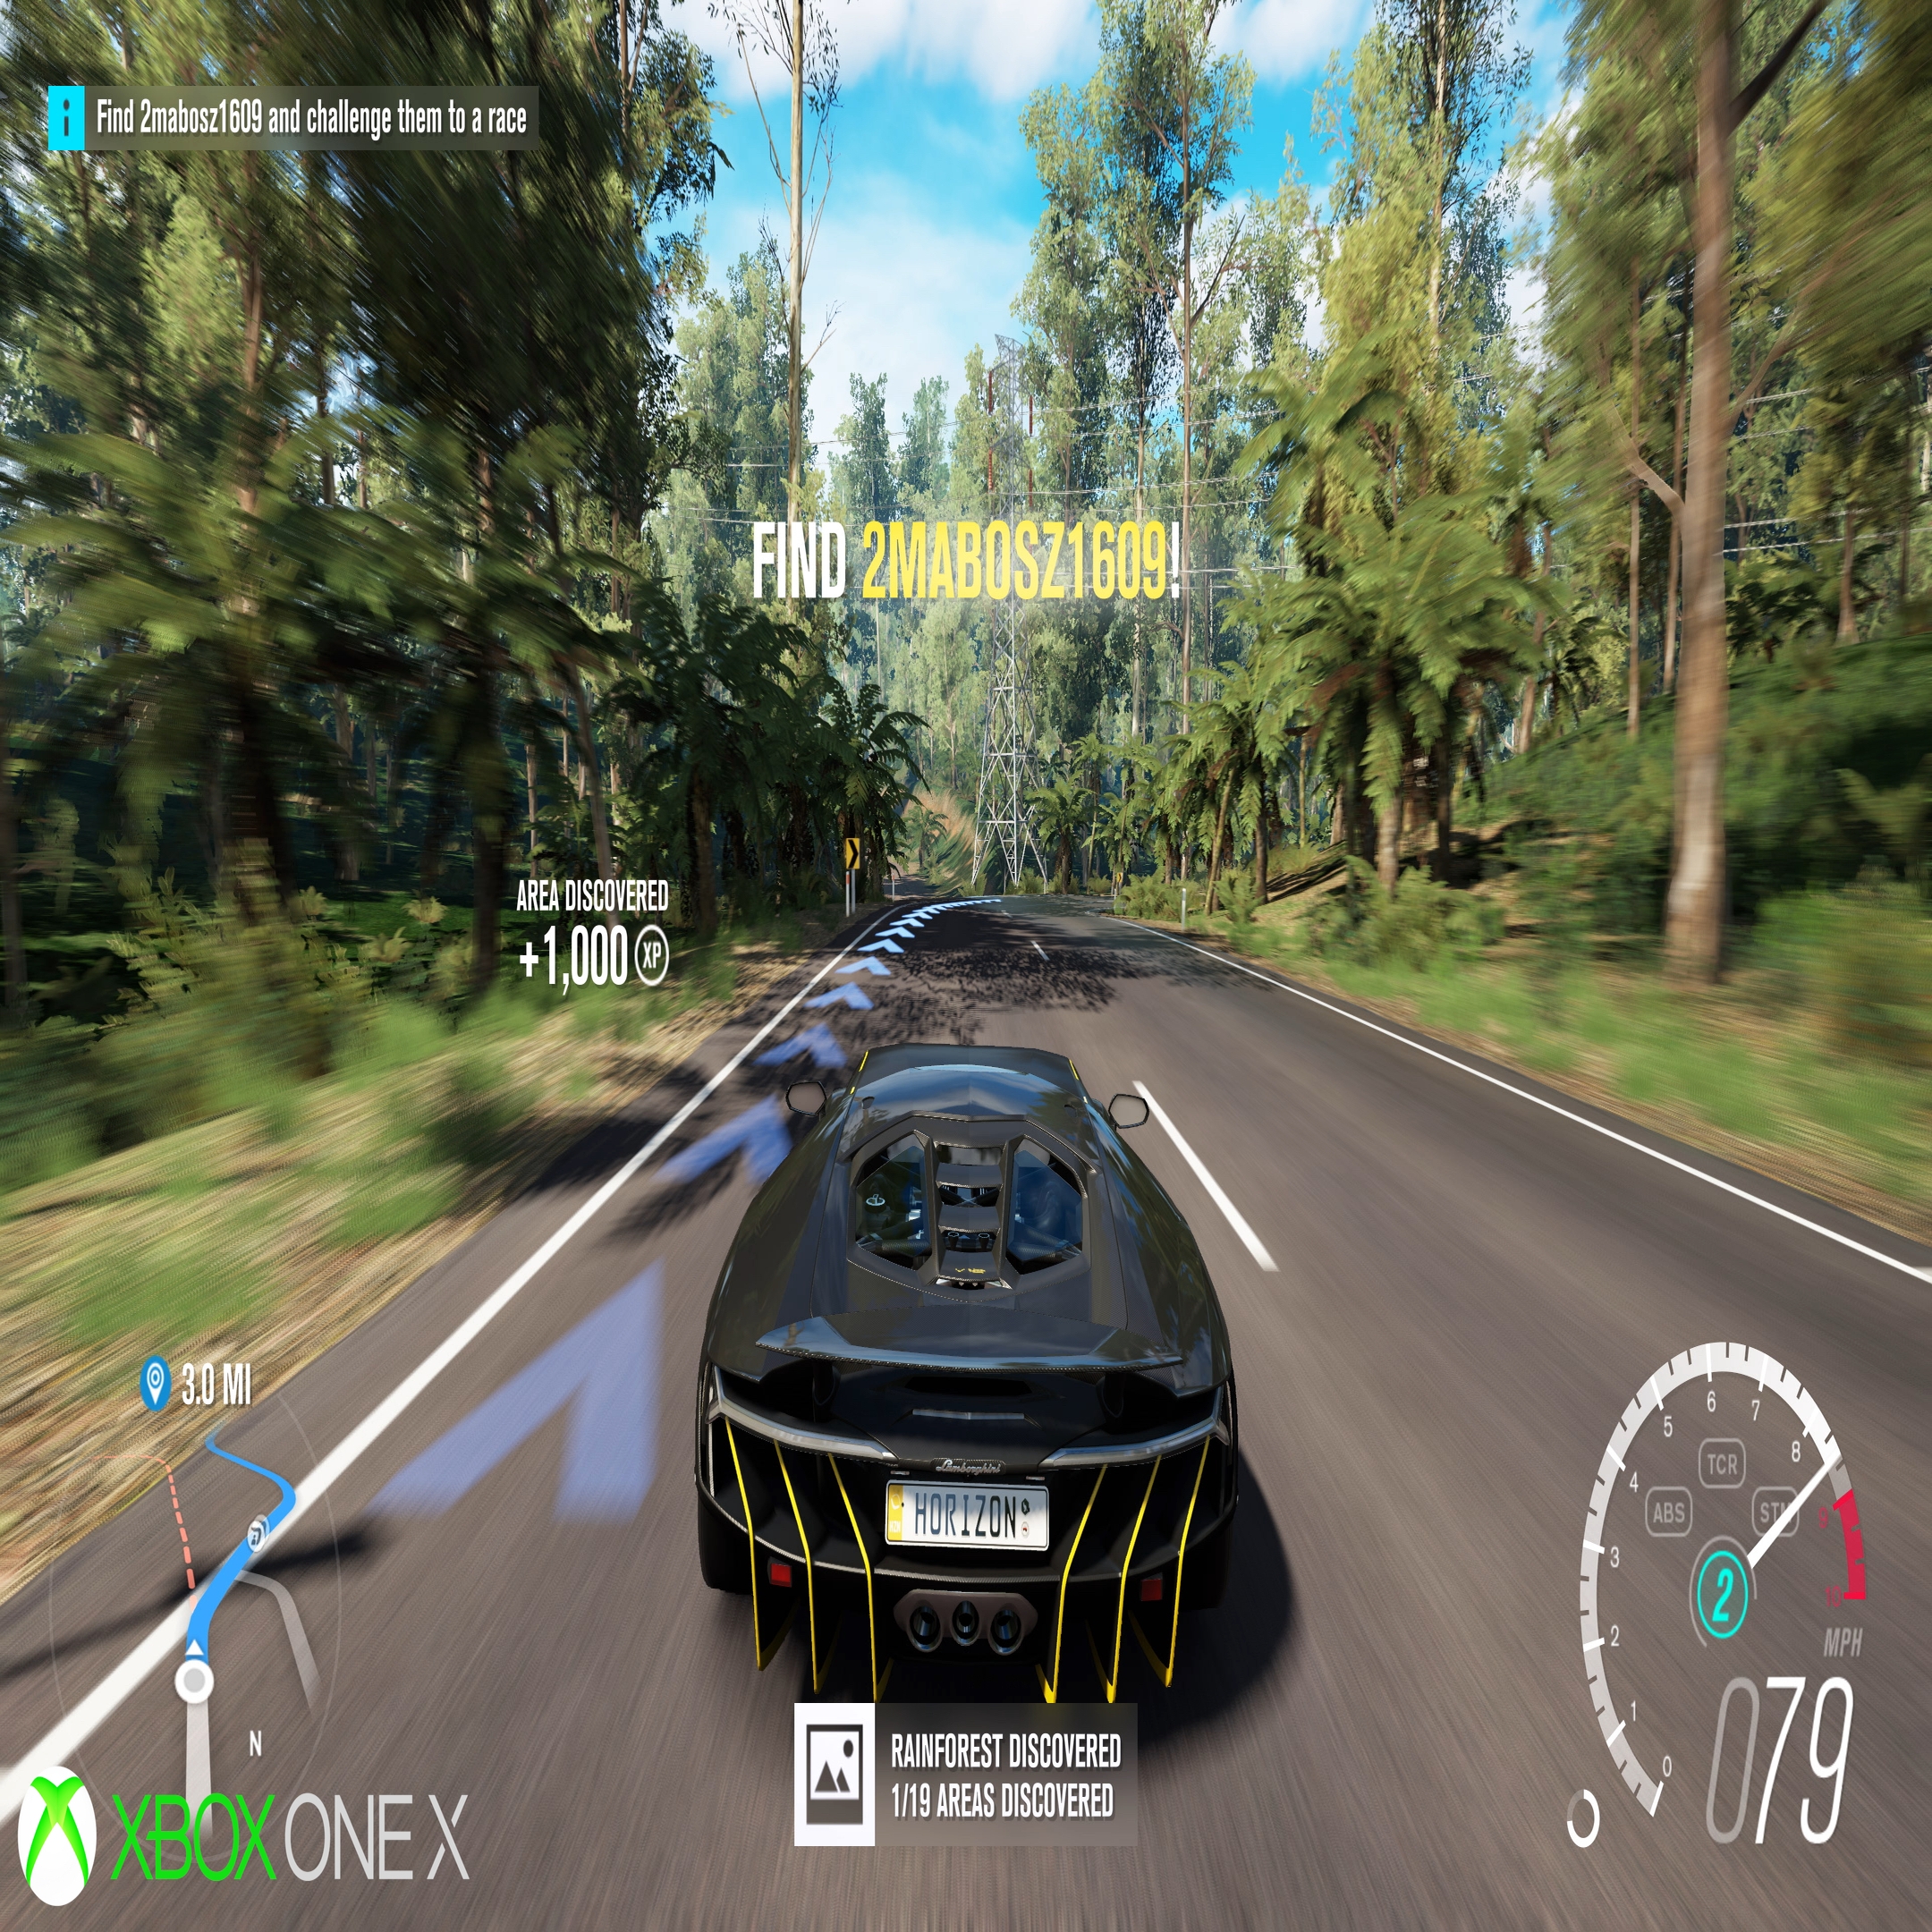 Forza Horizon 3 Gameplay (Xbox Series X UHD) [4K30FPS] 